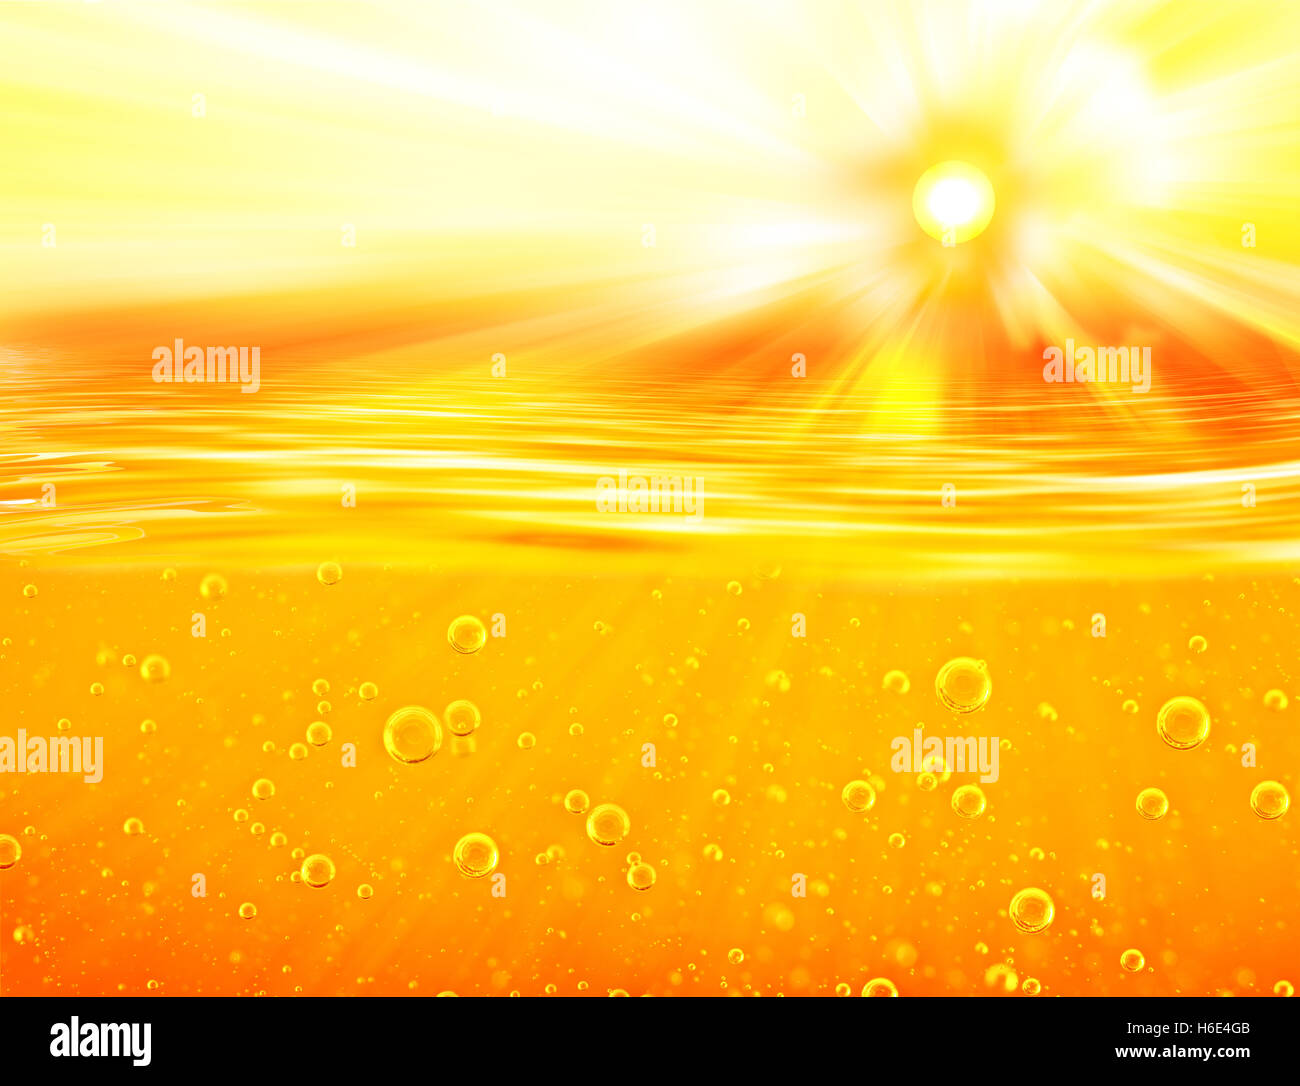 Honey sea. Orange yellow Liquid with oxygen bubbles. Orange yellow waves, sun, sky for  Oil, Honey, Beer, Juice. Stock Photo